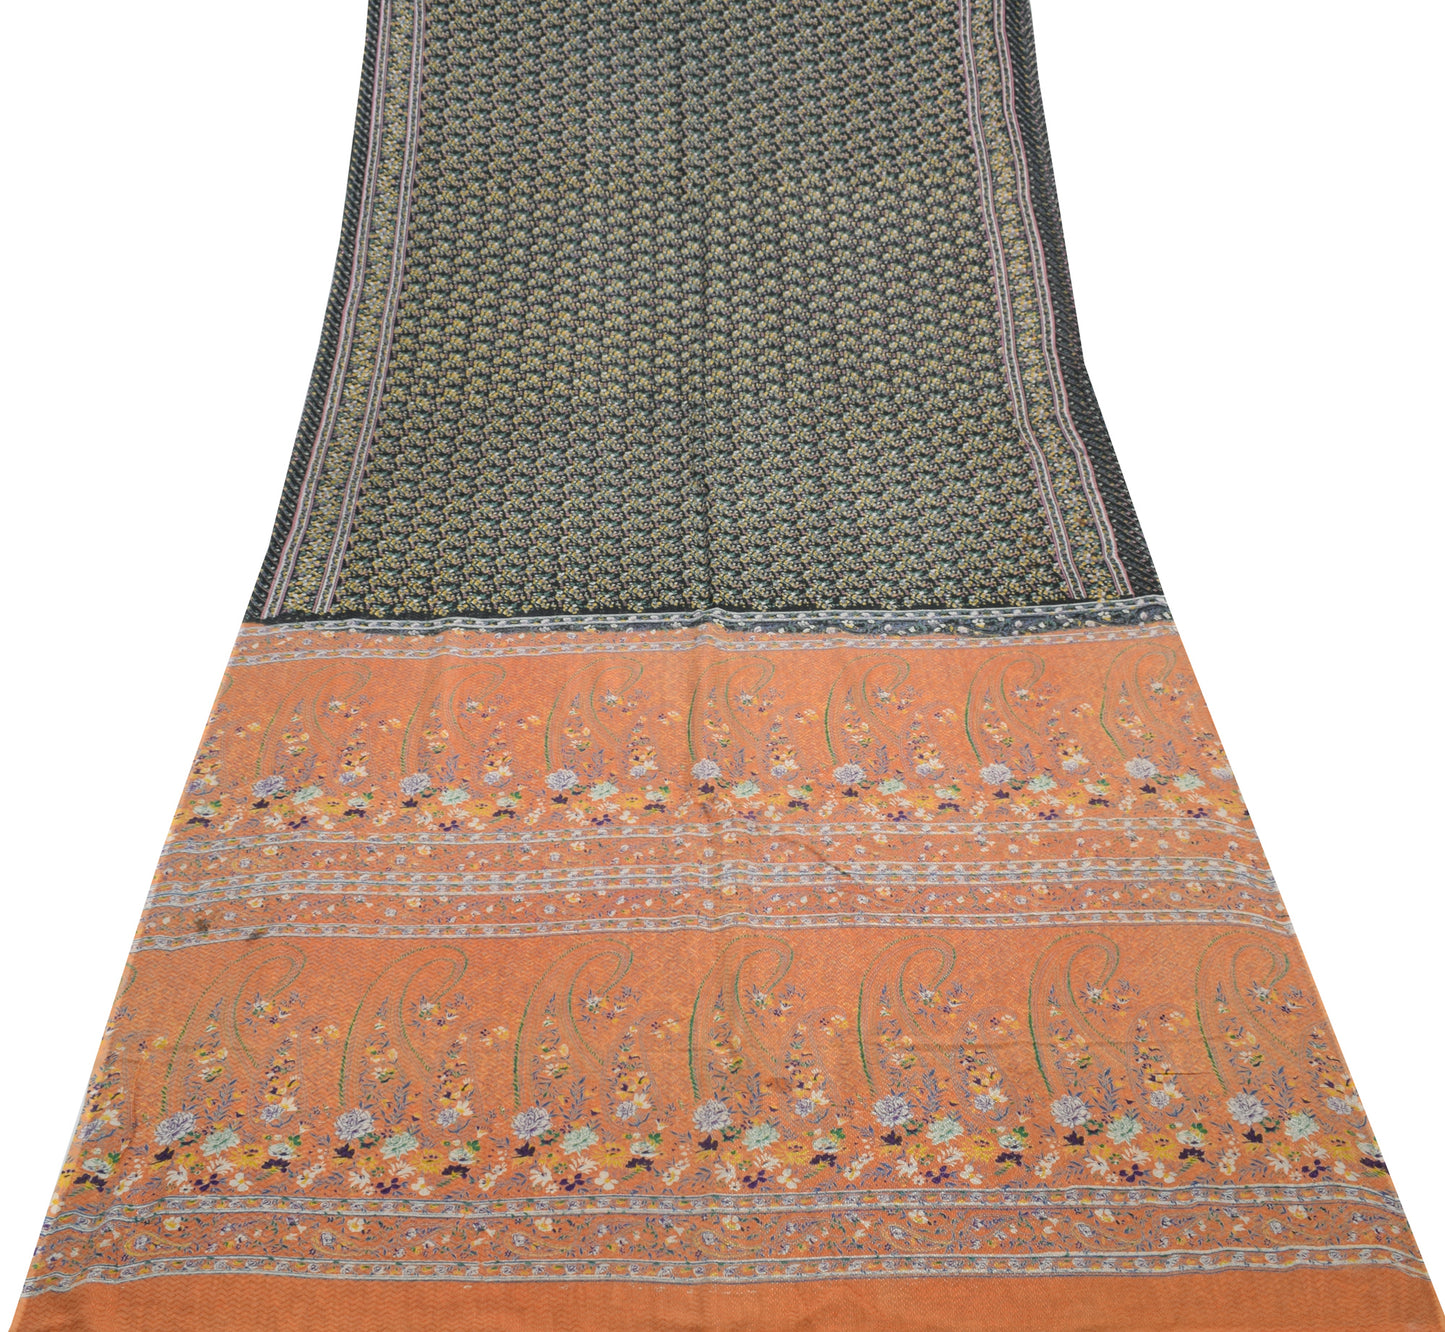 Sushila Vintage Black Saree 100% Pure Cotton Printed Floral Soft Craft Fabric